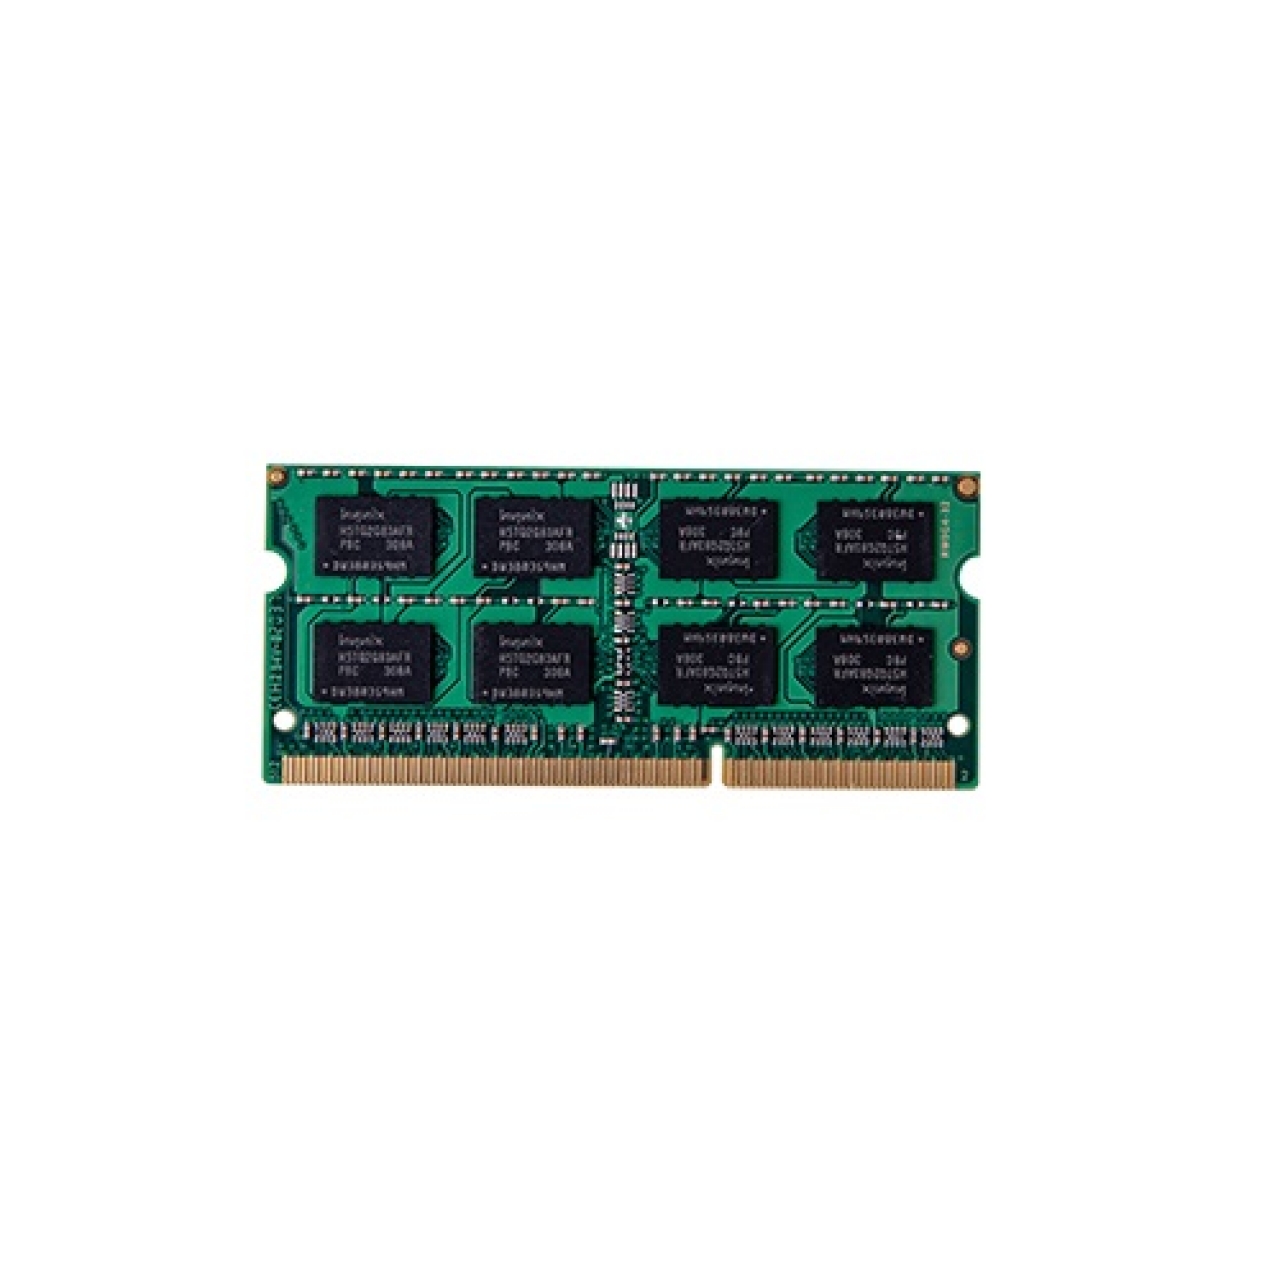 HI-LEVEL 8GB DDR3 1600MHZ NOTEBOOK RAM VALUE HLV-SOPC12800LV/8G 1.35volt (Low Voltage)